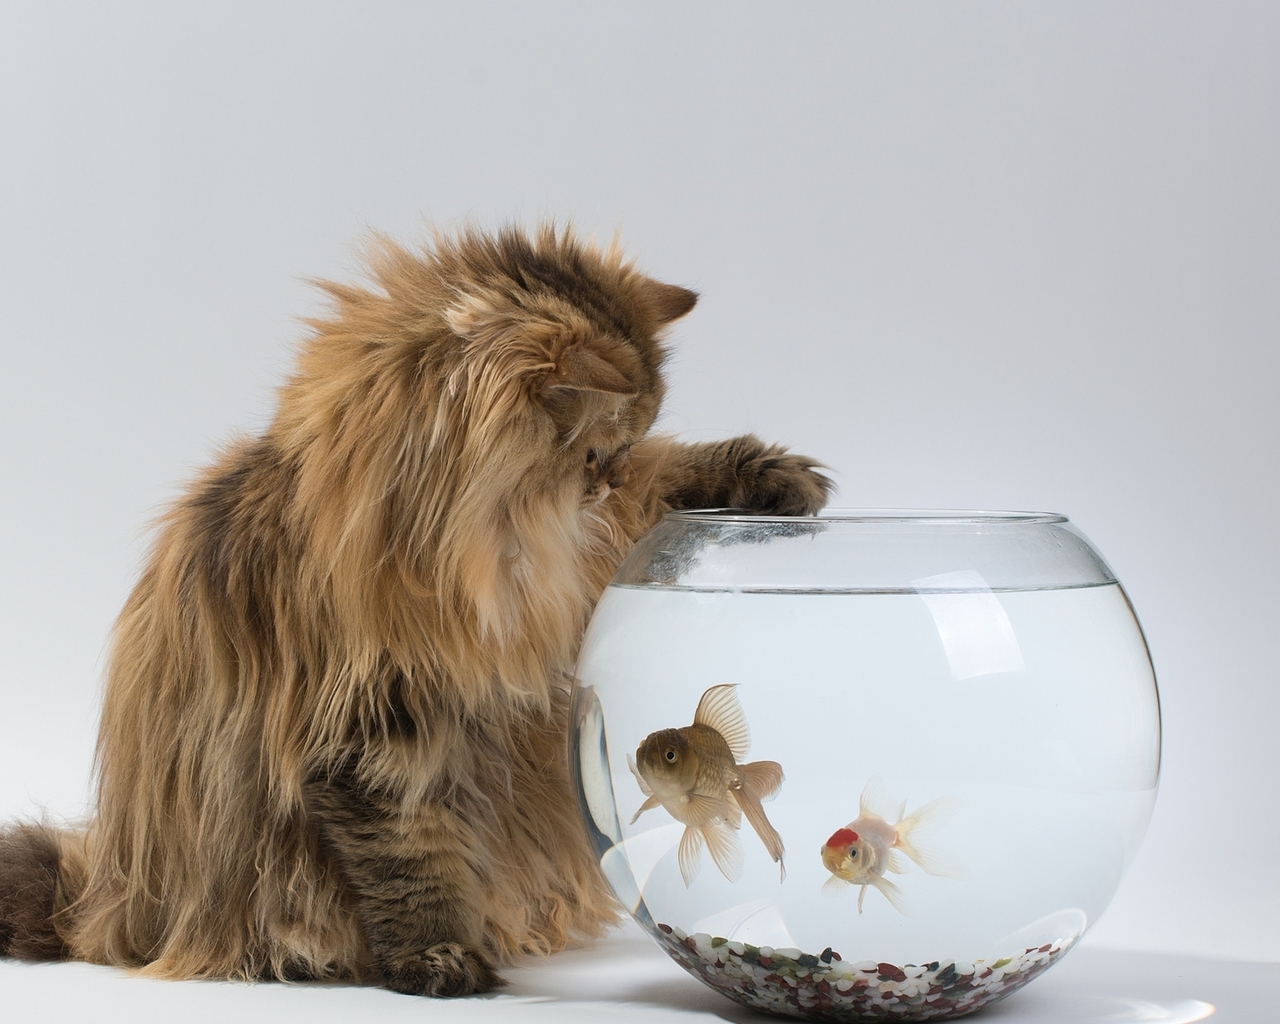 Картинка: Кошка, ловит, рыбки, аквариум, любопытство